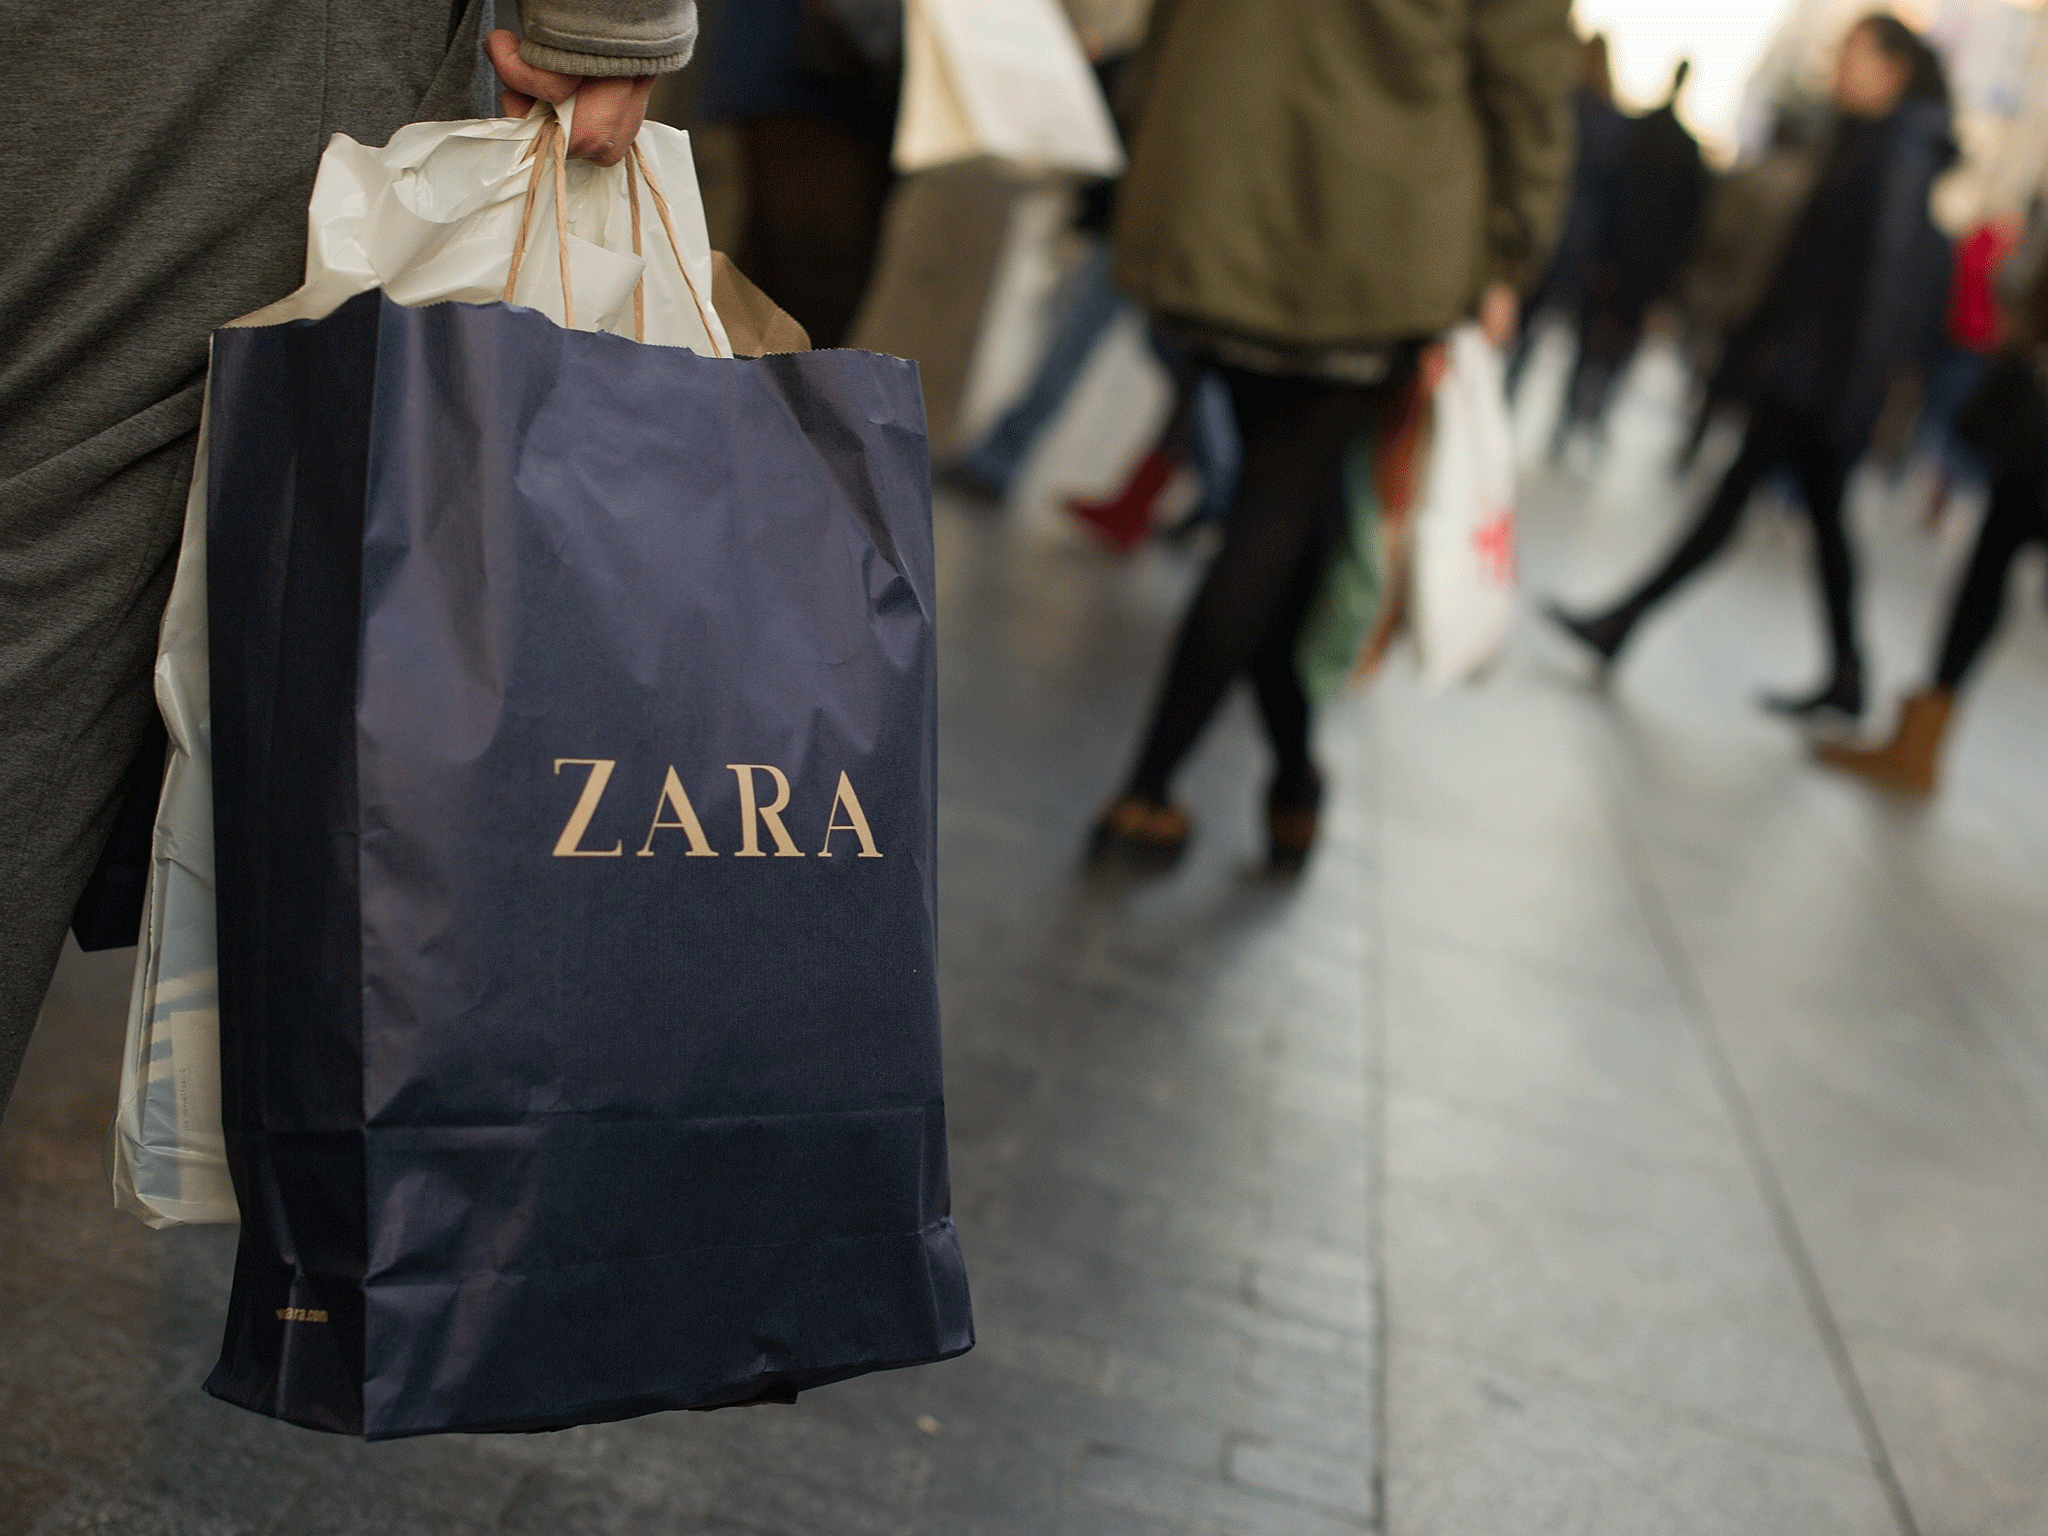 Zara owner shares rose 2.6% in Madrid